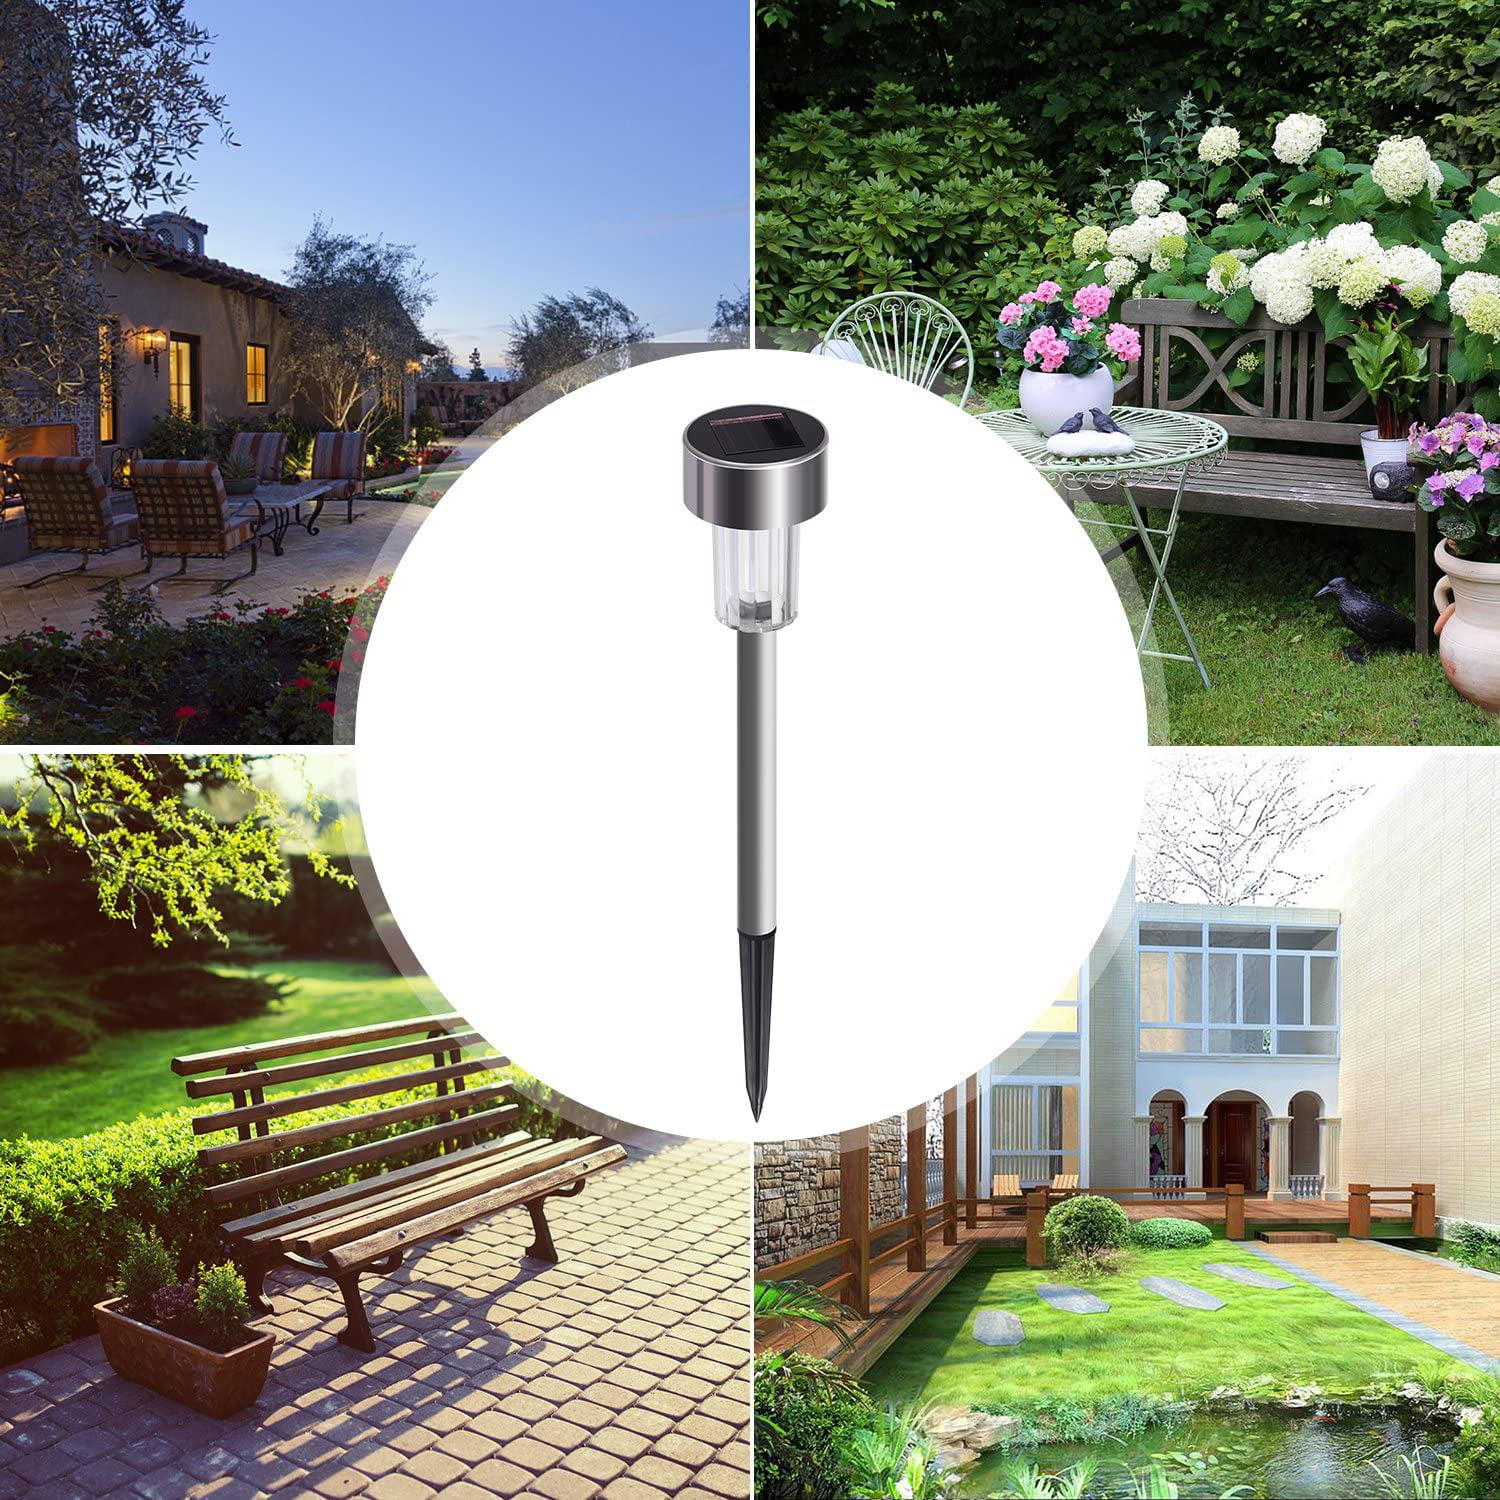 Details about   5/10PCS Solar Garden LED Lights Outdoor Waterproof Landscape Lawn Pathway Lamp 